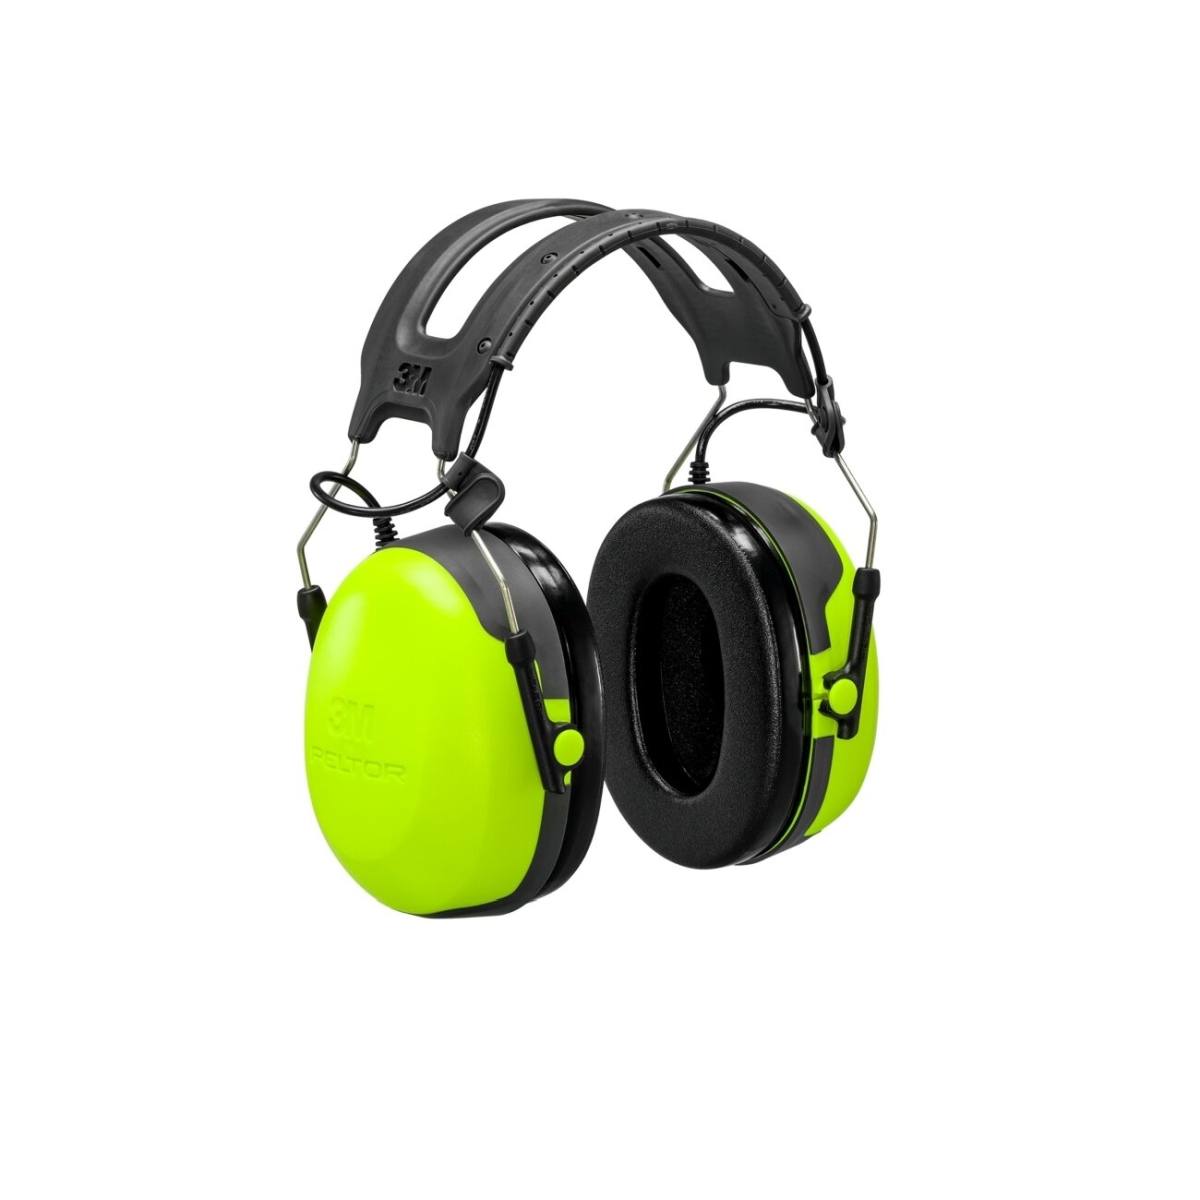 3M PELTOR CH-3 Protection auditive, Listen-Only, serre-tête, jaune, HT52A-112